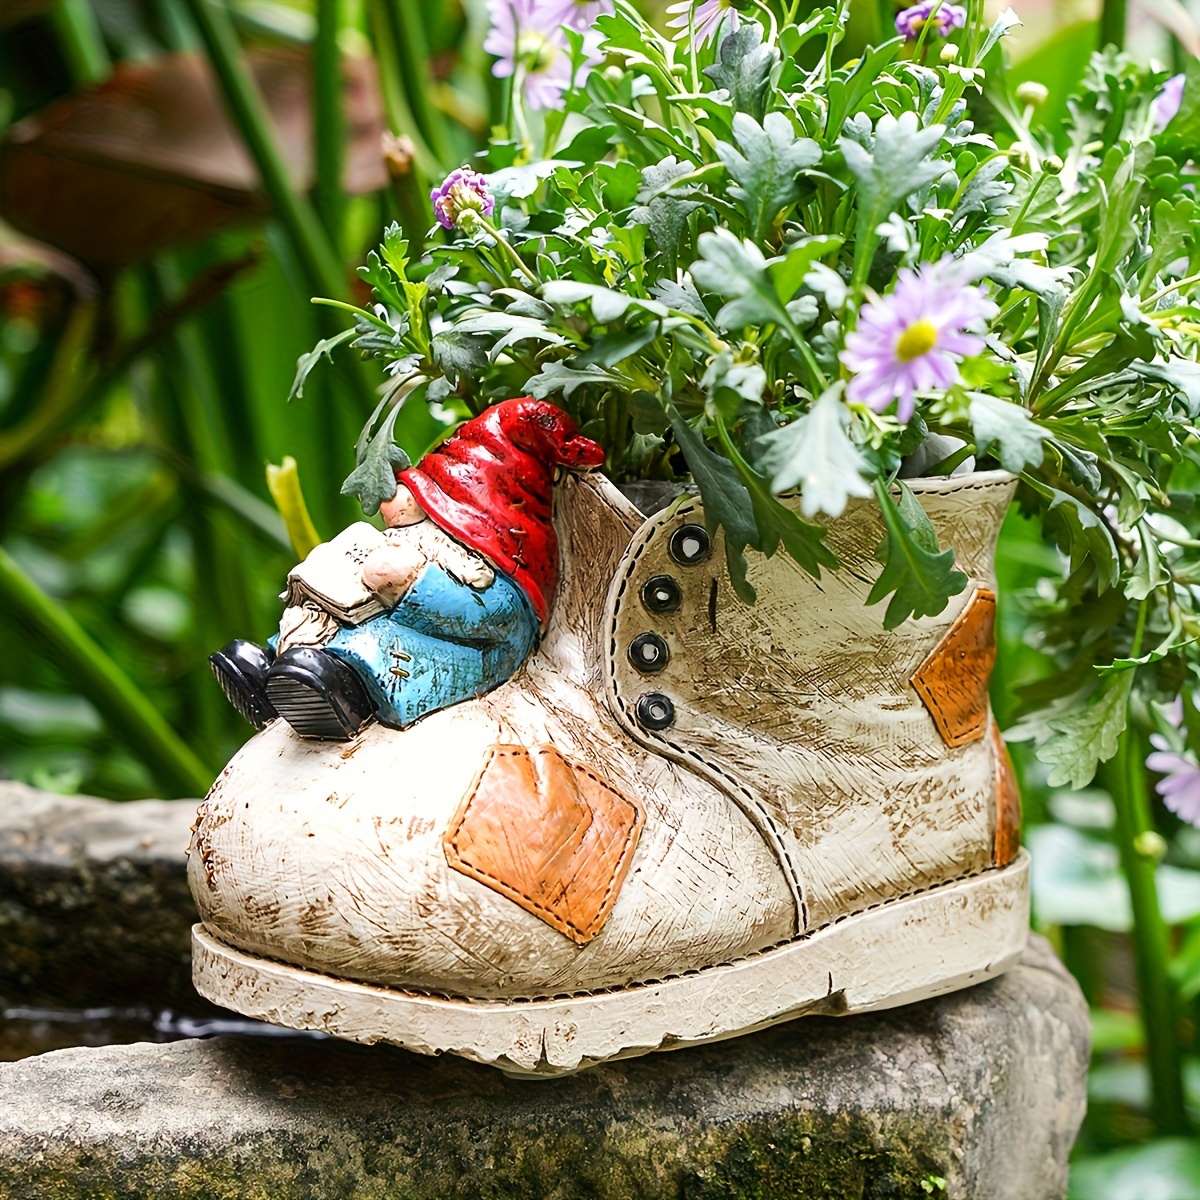 

1pc Rustic Resin Gnome Boot Planter, Decorative 3d Garden Gnome Flower Pot, Vintage Shoe Succulent Container For Outdoor & Home Decor, Festive Farmhouse Style Yard Balcony Accent